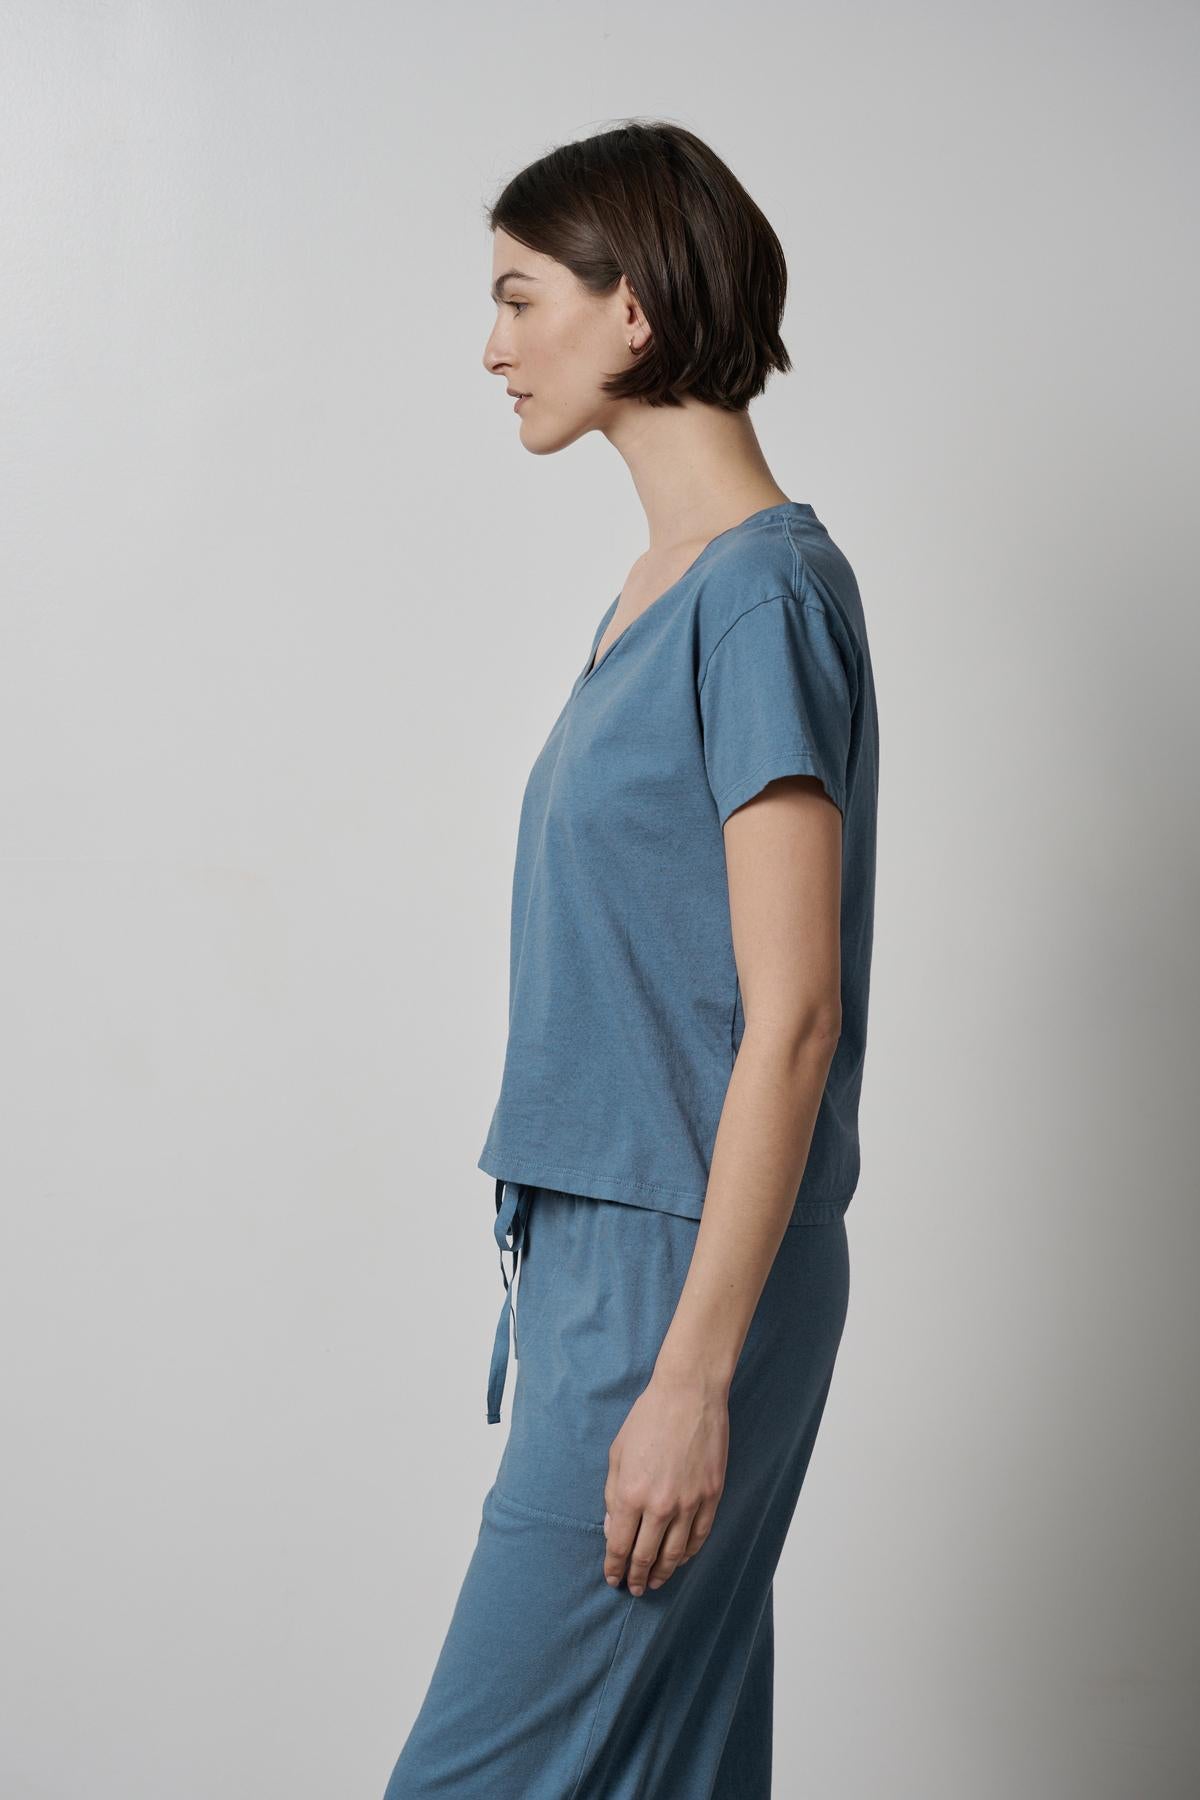 The model is wearing a blue Velvet by Jenny Graham organic cotton pyjama set.-35495940915393